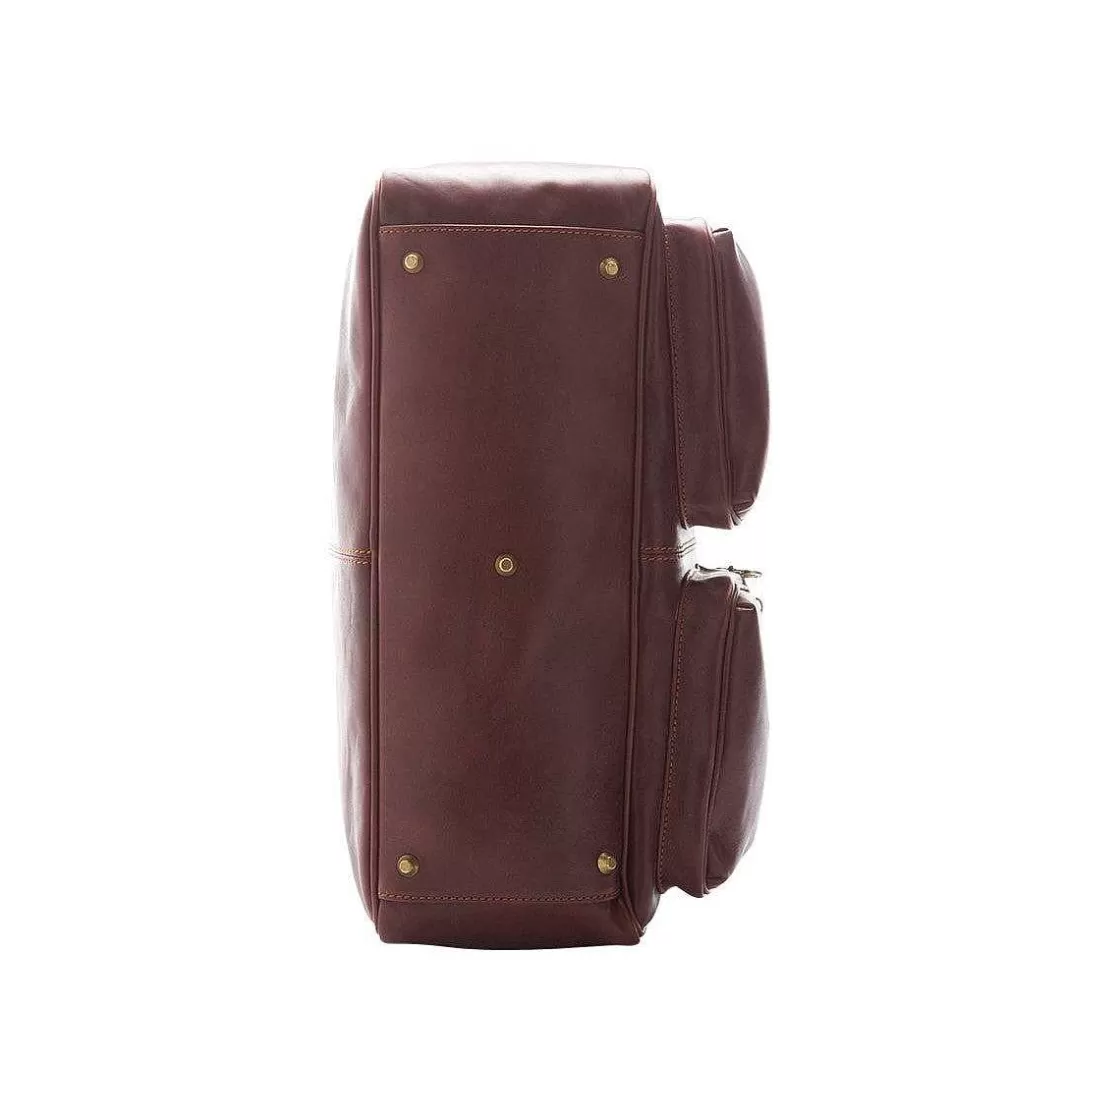 Leonardo Business Bag In Full Grain Leather With Zip Closure, Front Pockets And Adjustable Shoulder Strap Hot